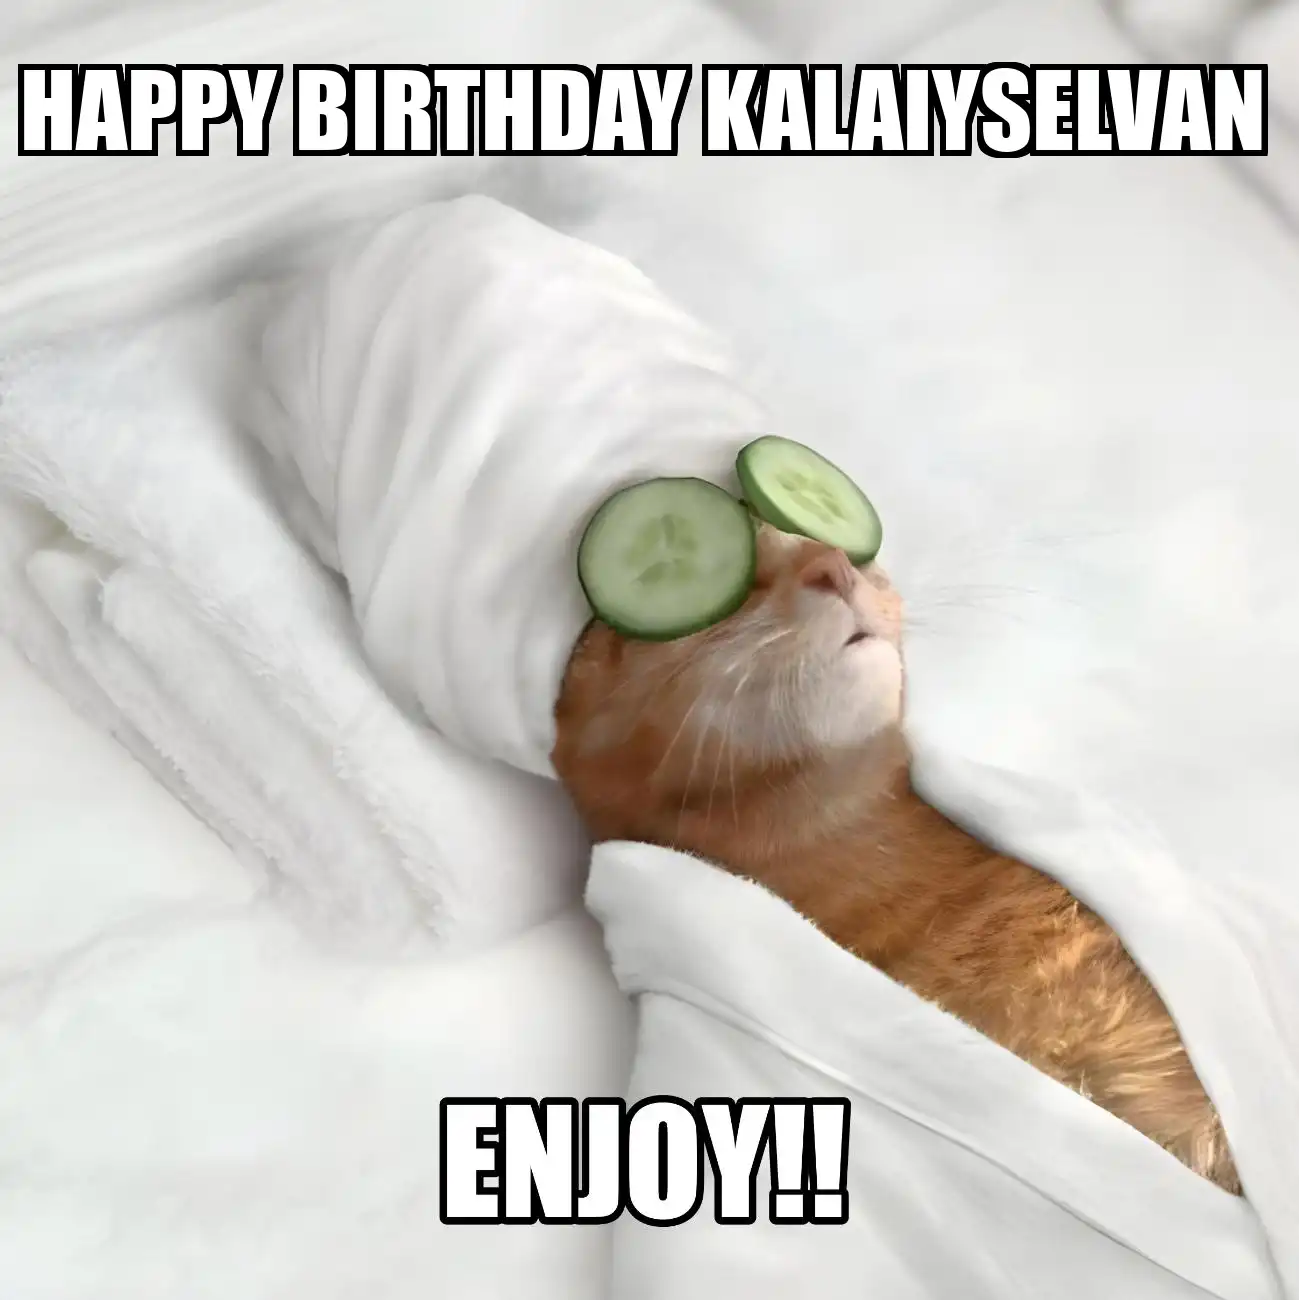 Happy Birthday Kalaiyselvan Enjoy Cat Meme